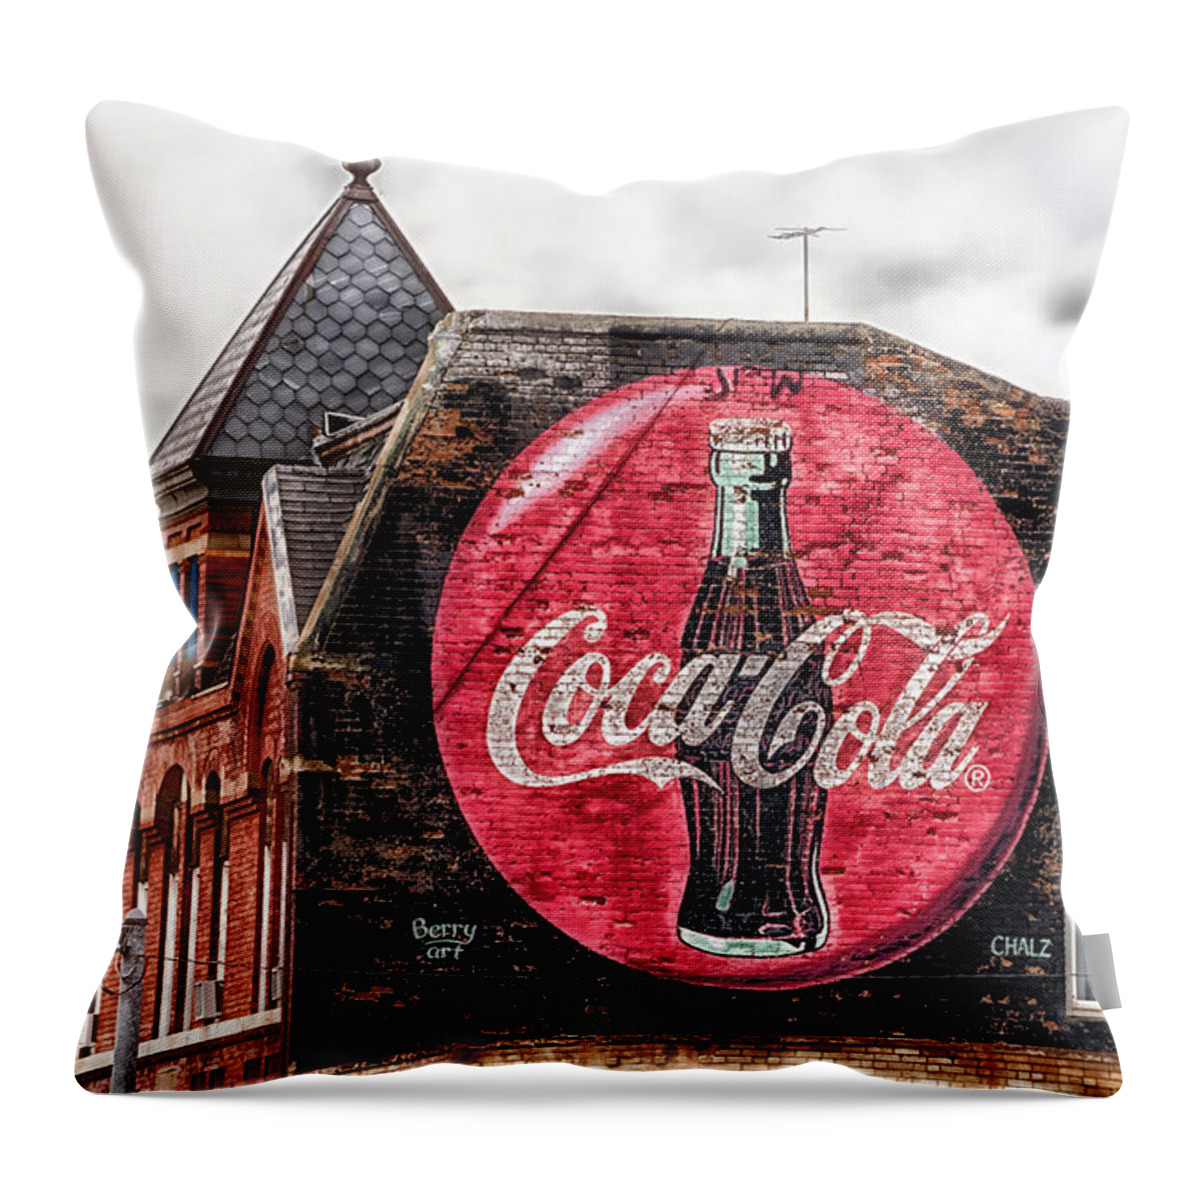 Coca-cola Throw Pillow featuring the photograph Drink Coca-Cola by Mountain Dreams